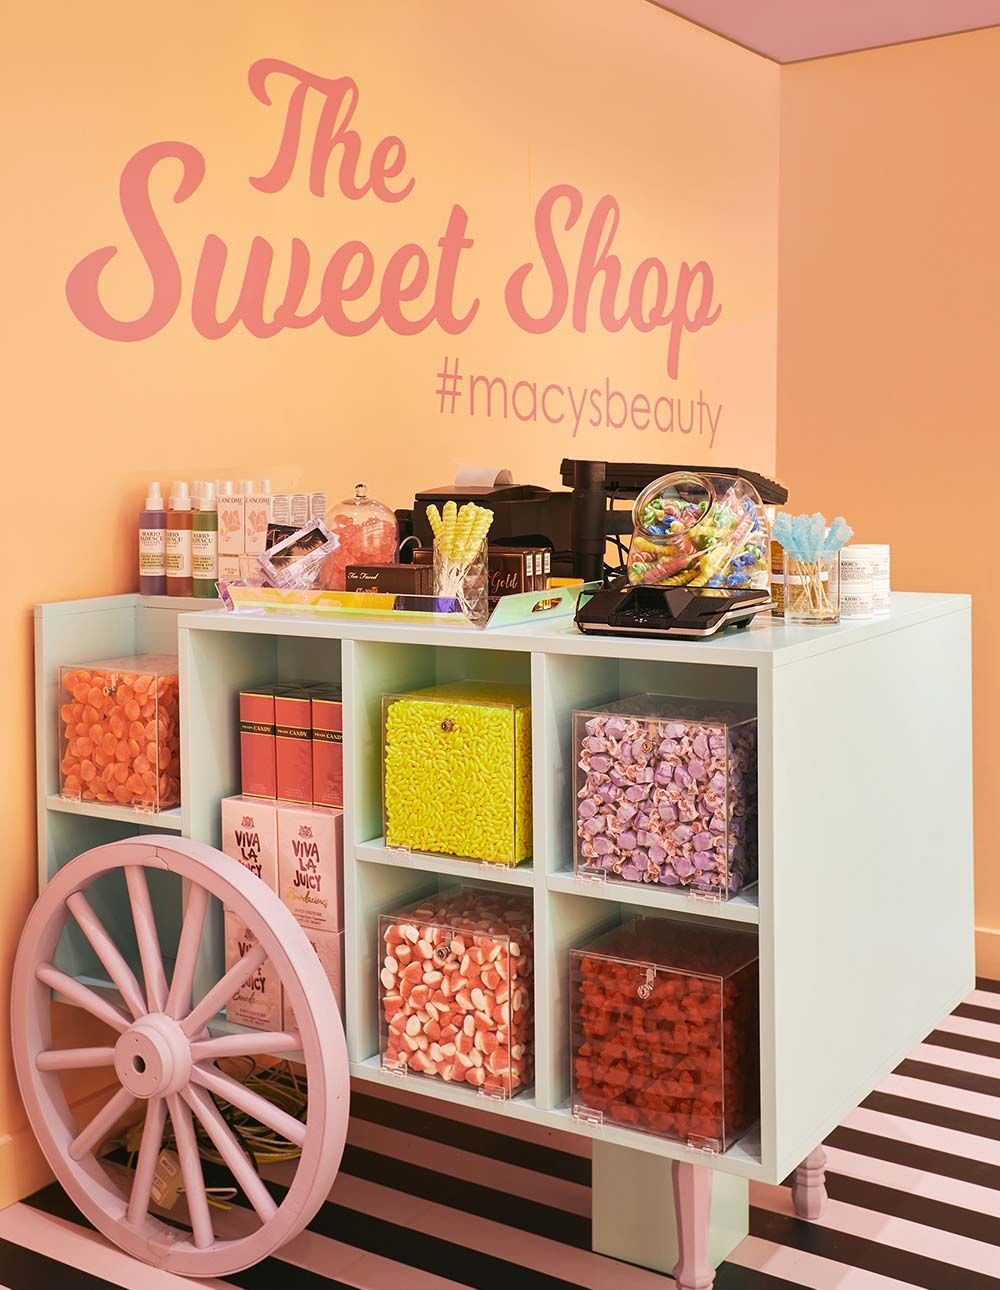 Macy’s “The Sweet Shop”